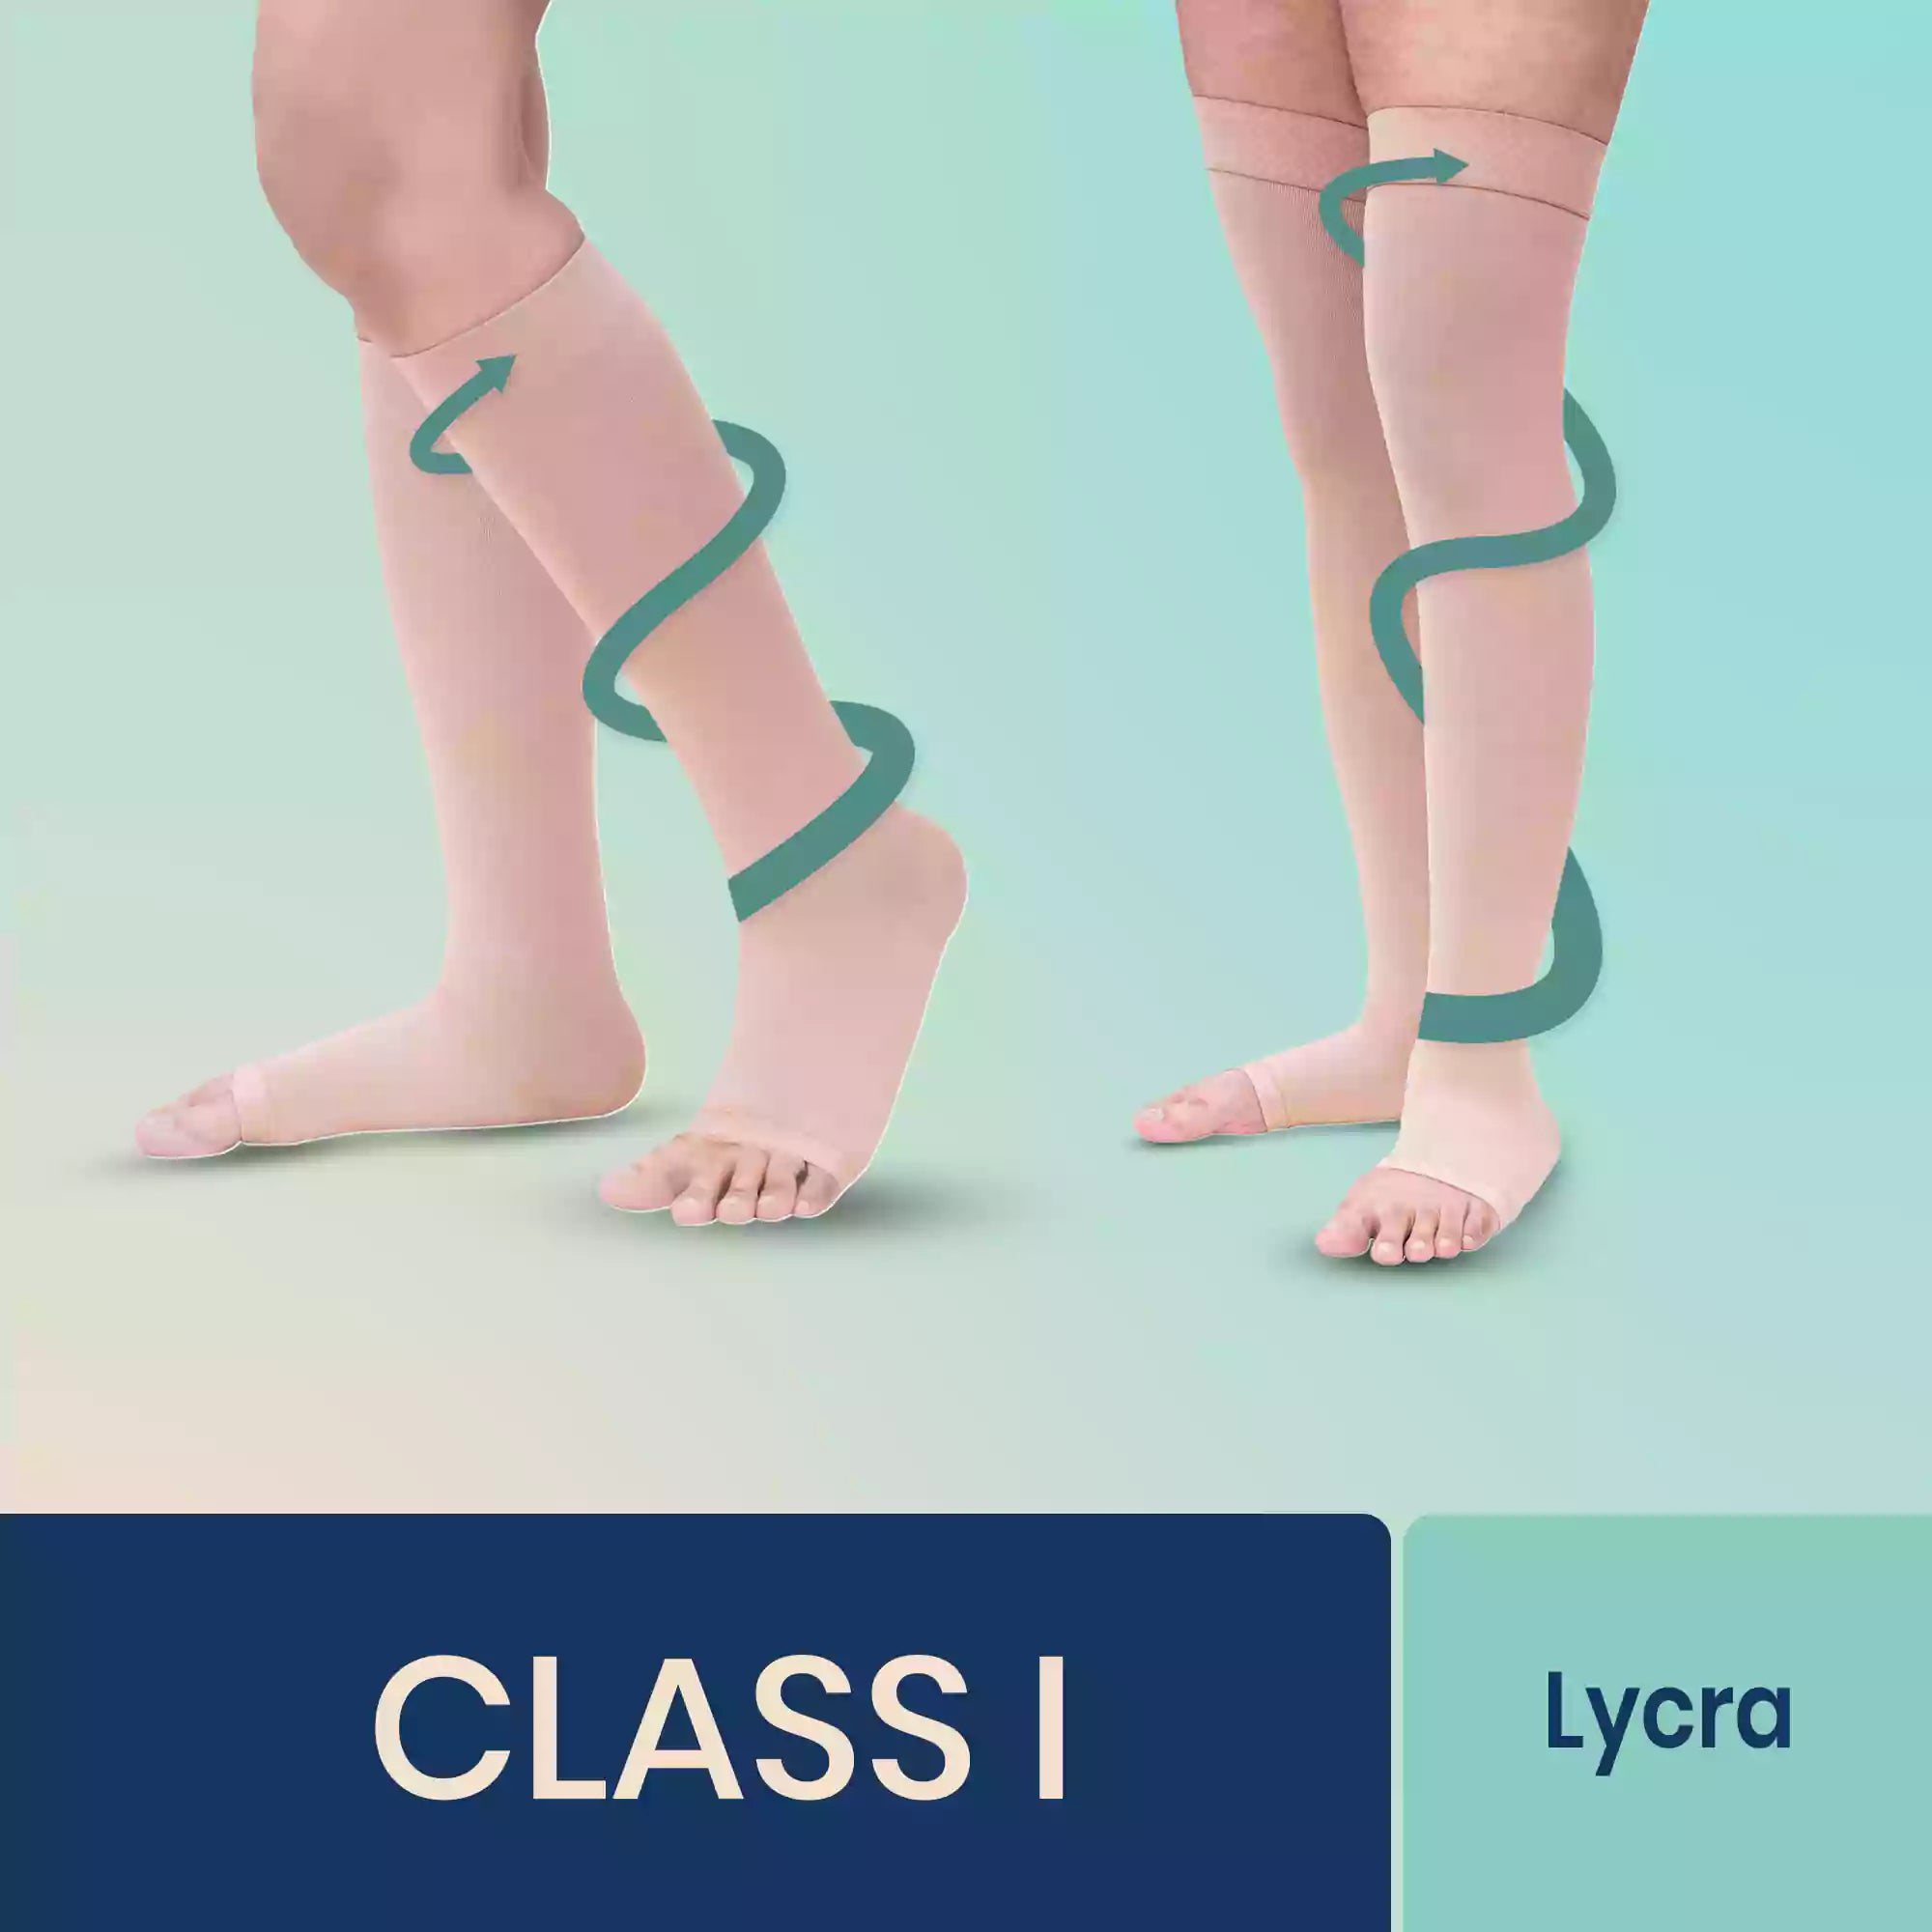 class I compression stockings